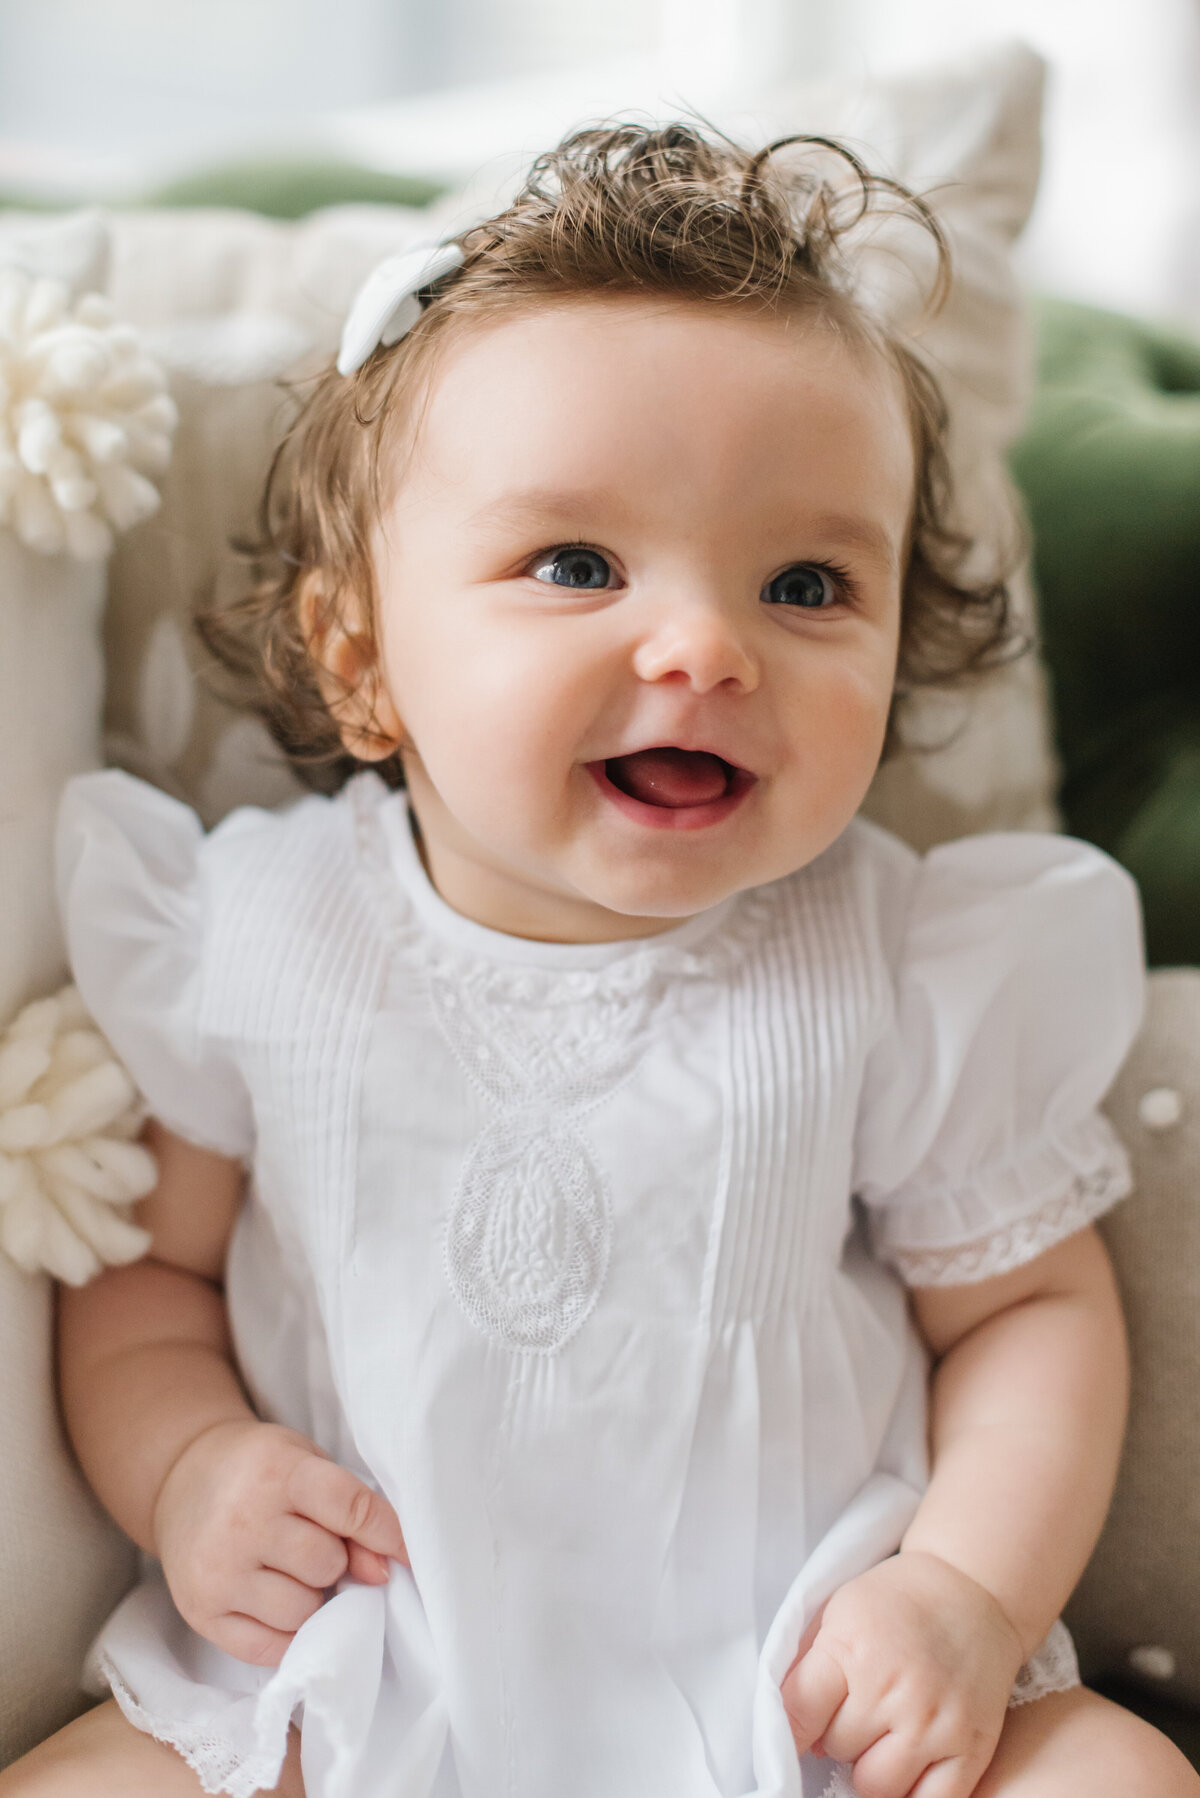 Baby girl giggling in white dress